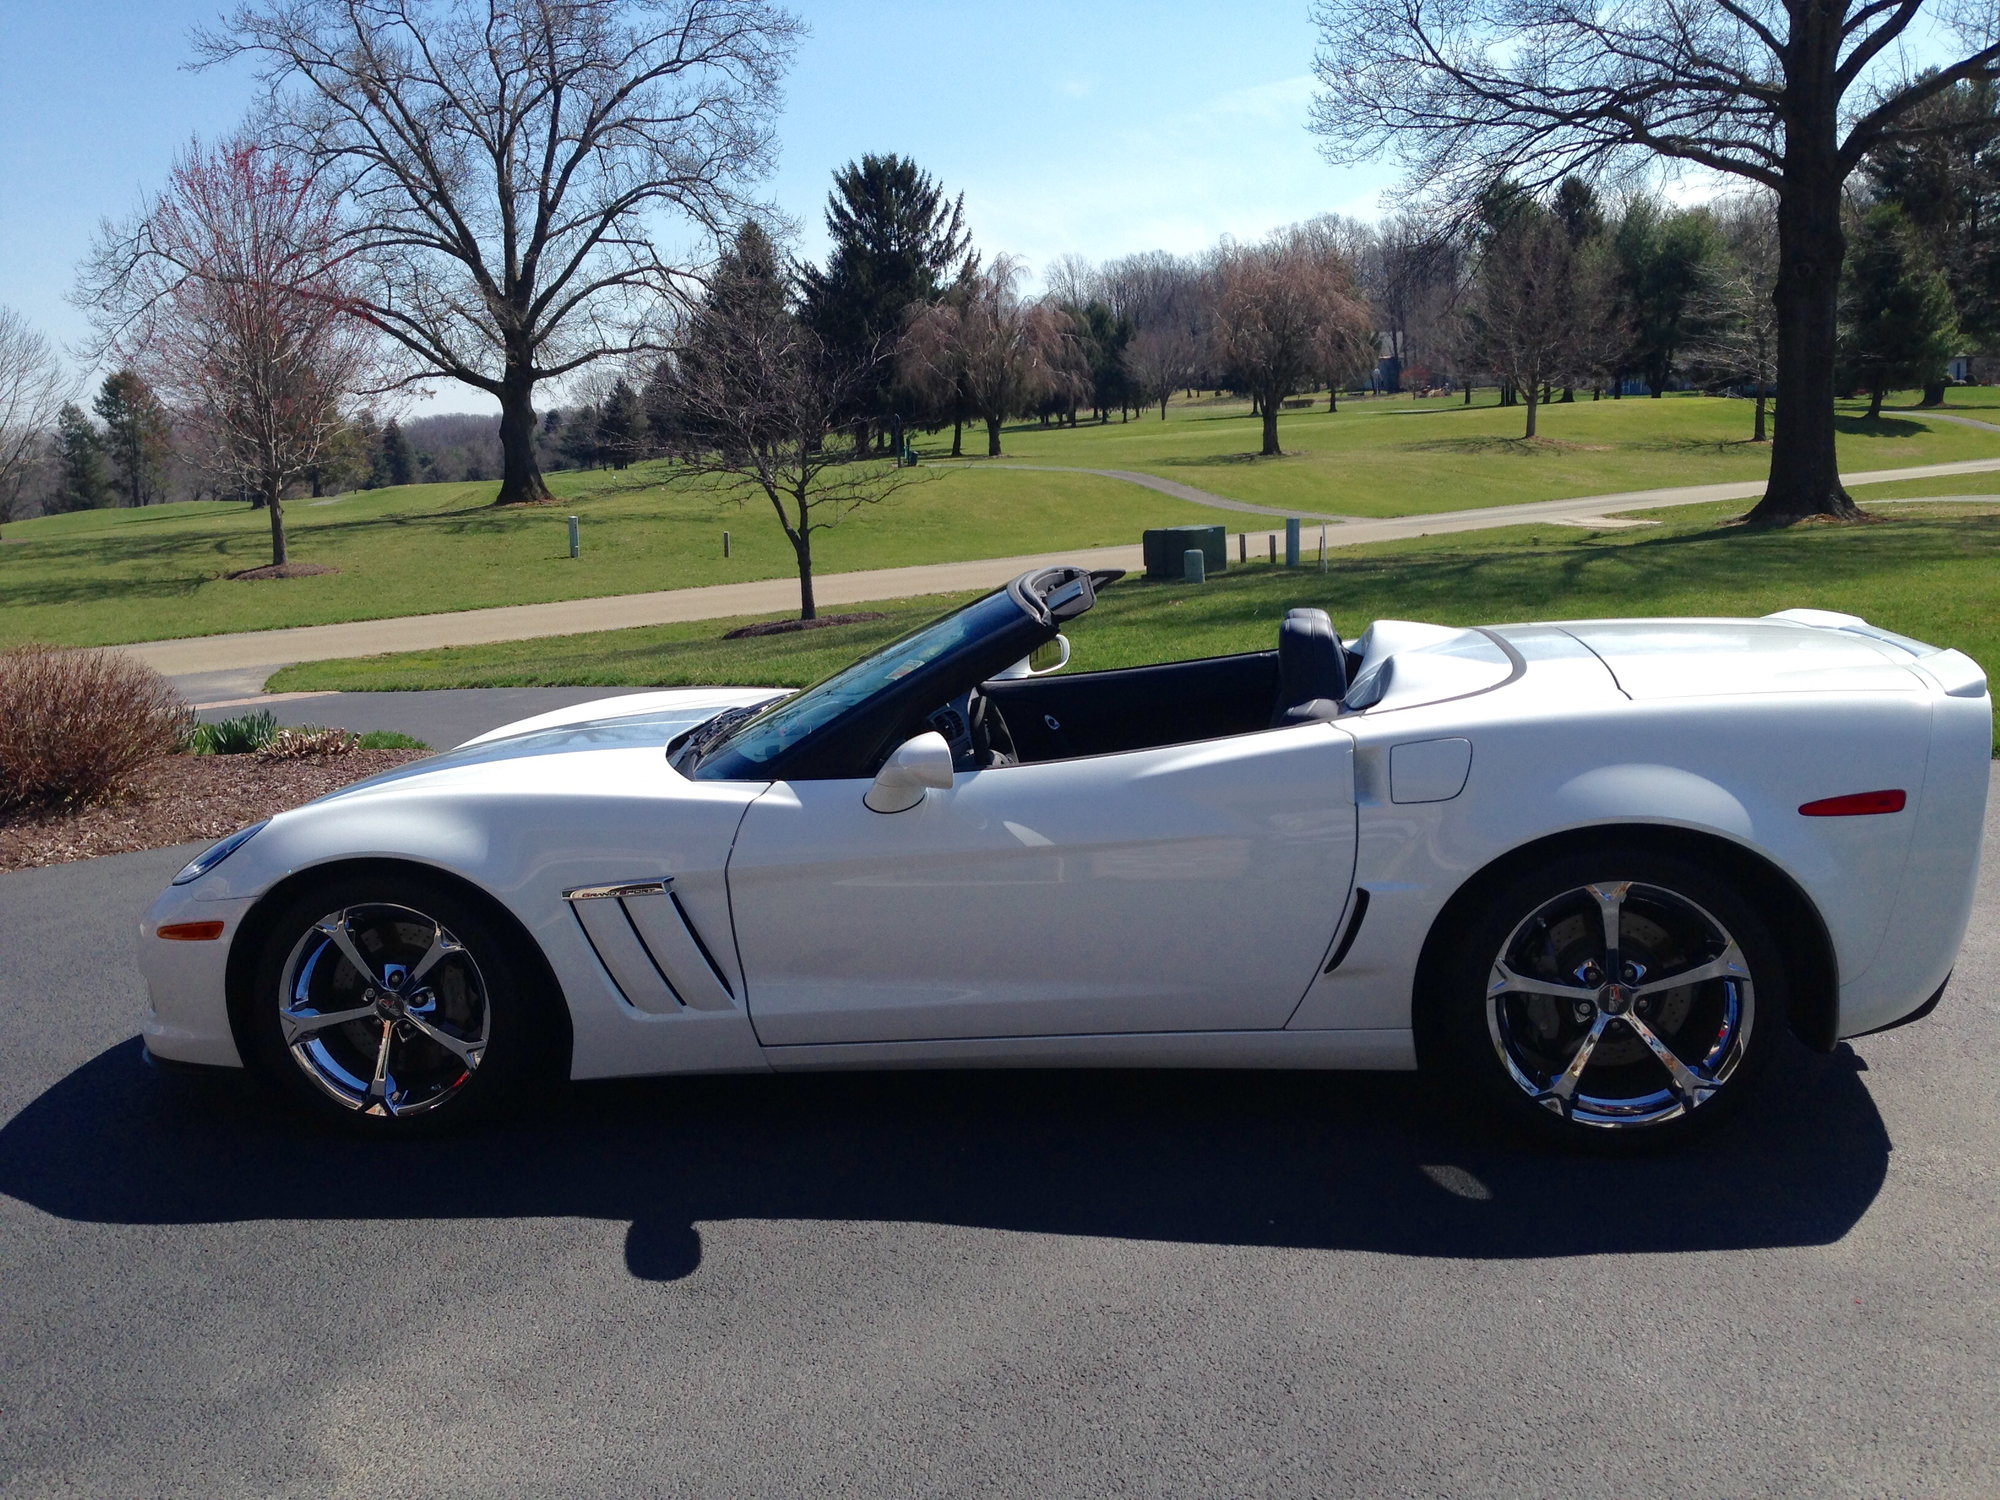 precious metal investing 2013 corvette